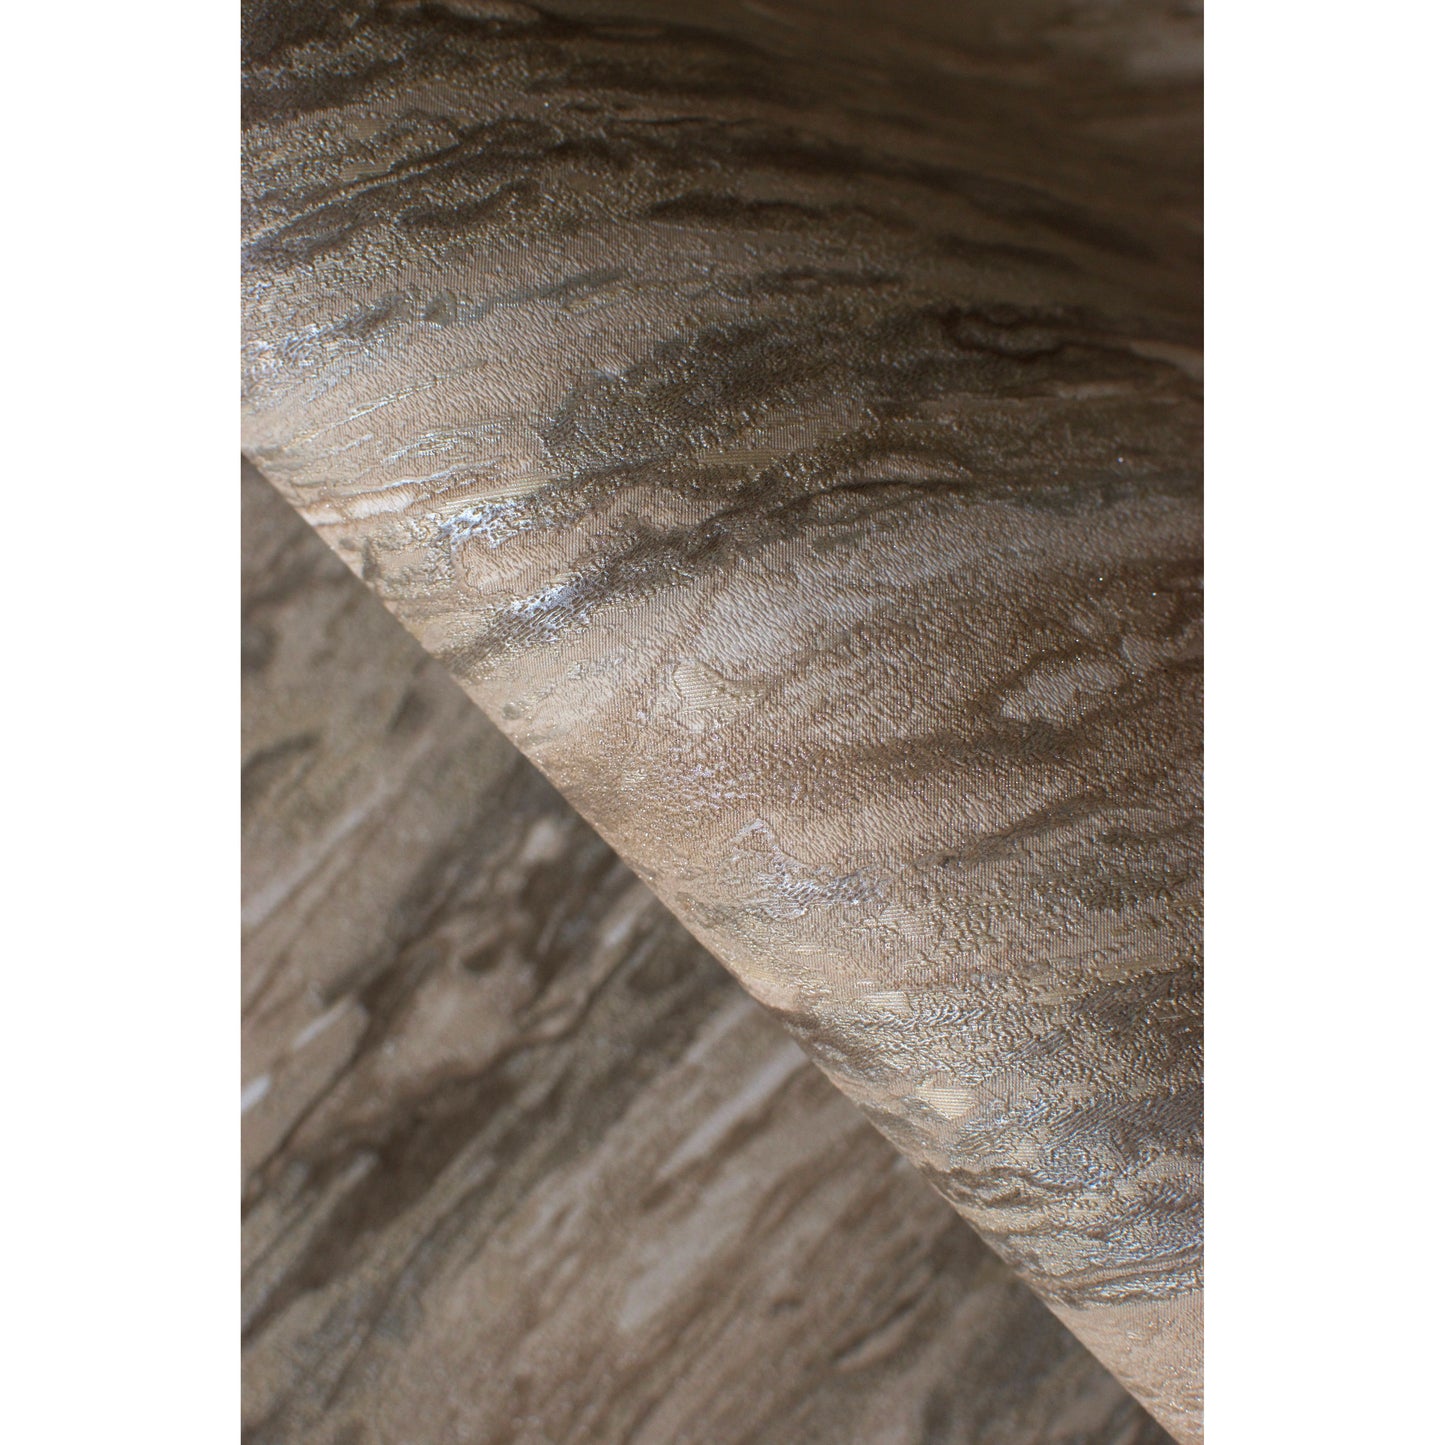 Muriva Venezia Marble Taupe Wallpaper (M66308)